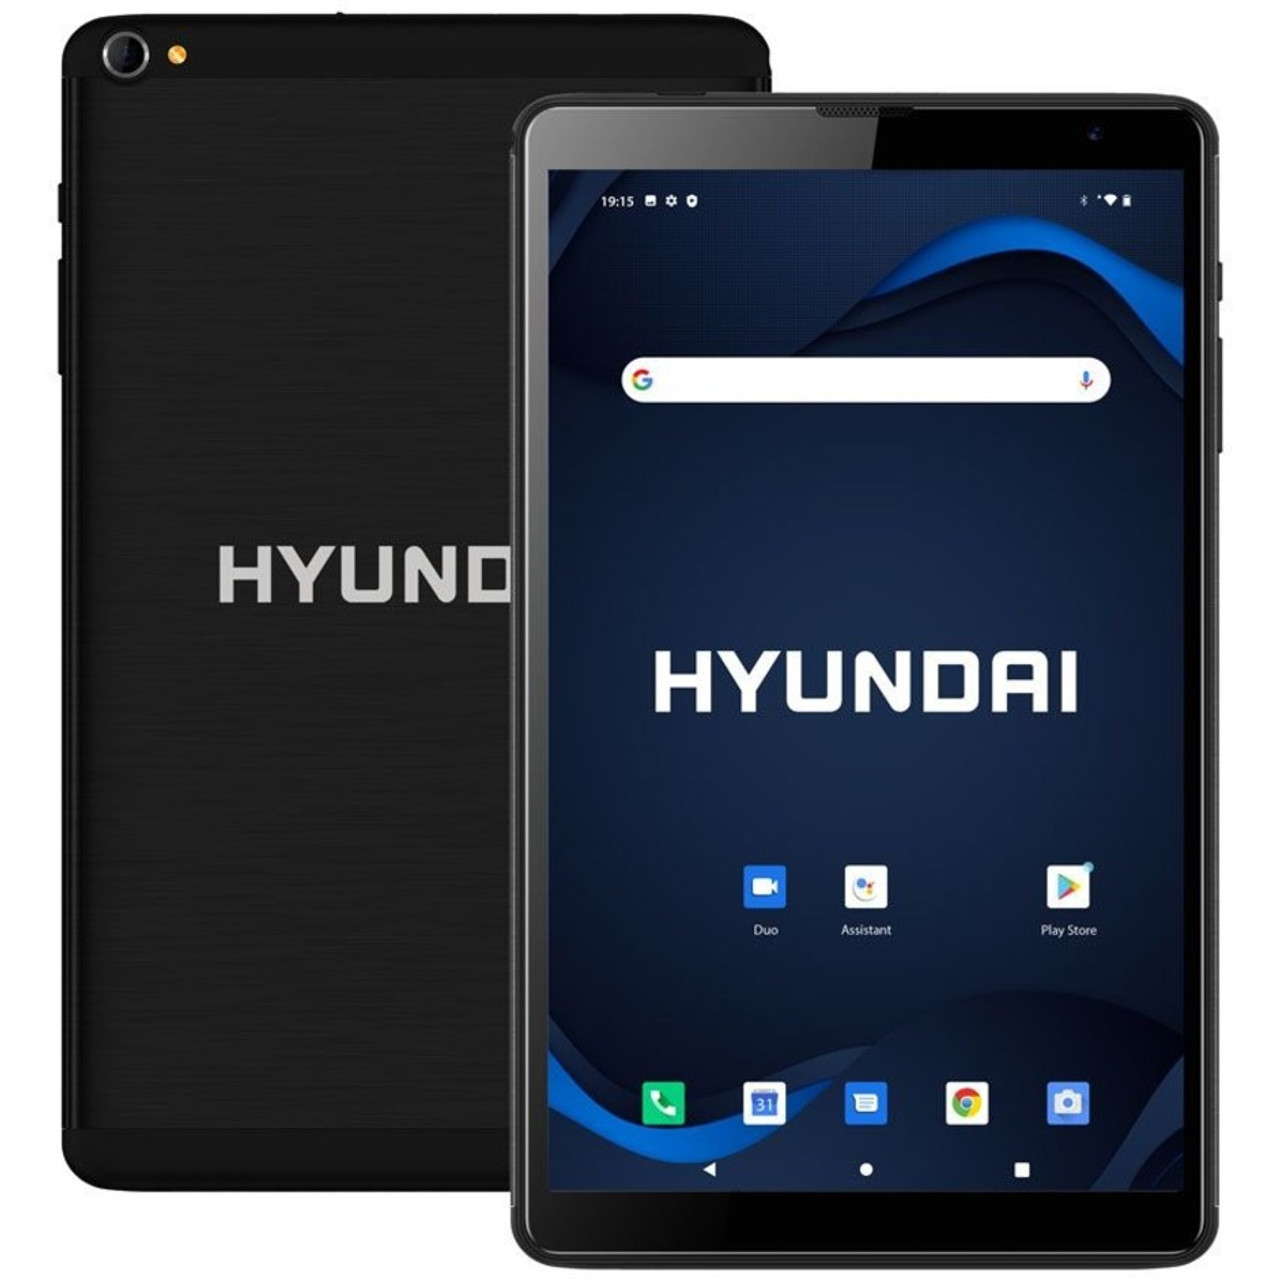 Hyundai HyTab Plus 8LB1, 8" Tablet, 800x1280 HD IPS, Android 10 Go edition, Quad-Core Processor, 2GB RAM, 32GB Storage, 2MP/5MP, LTE, Black - HT8LB1PBKLTM